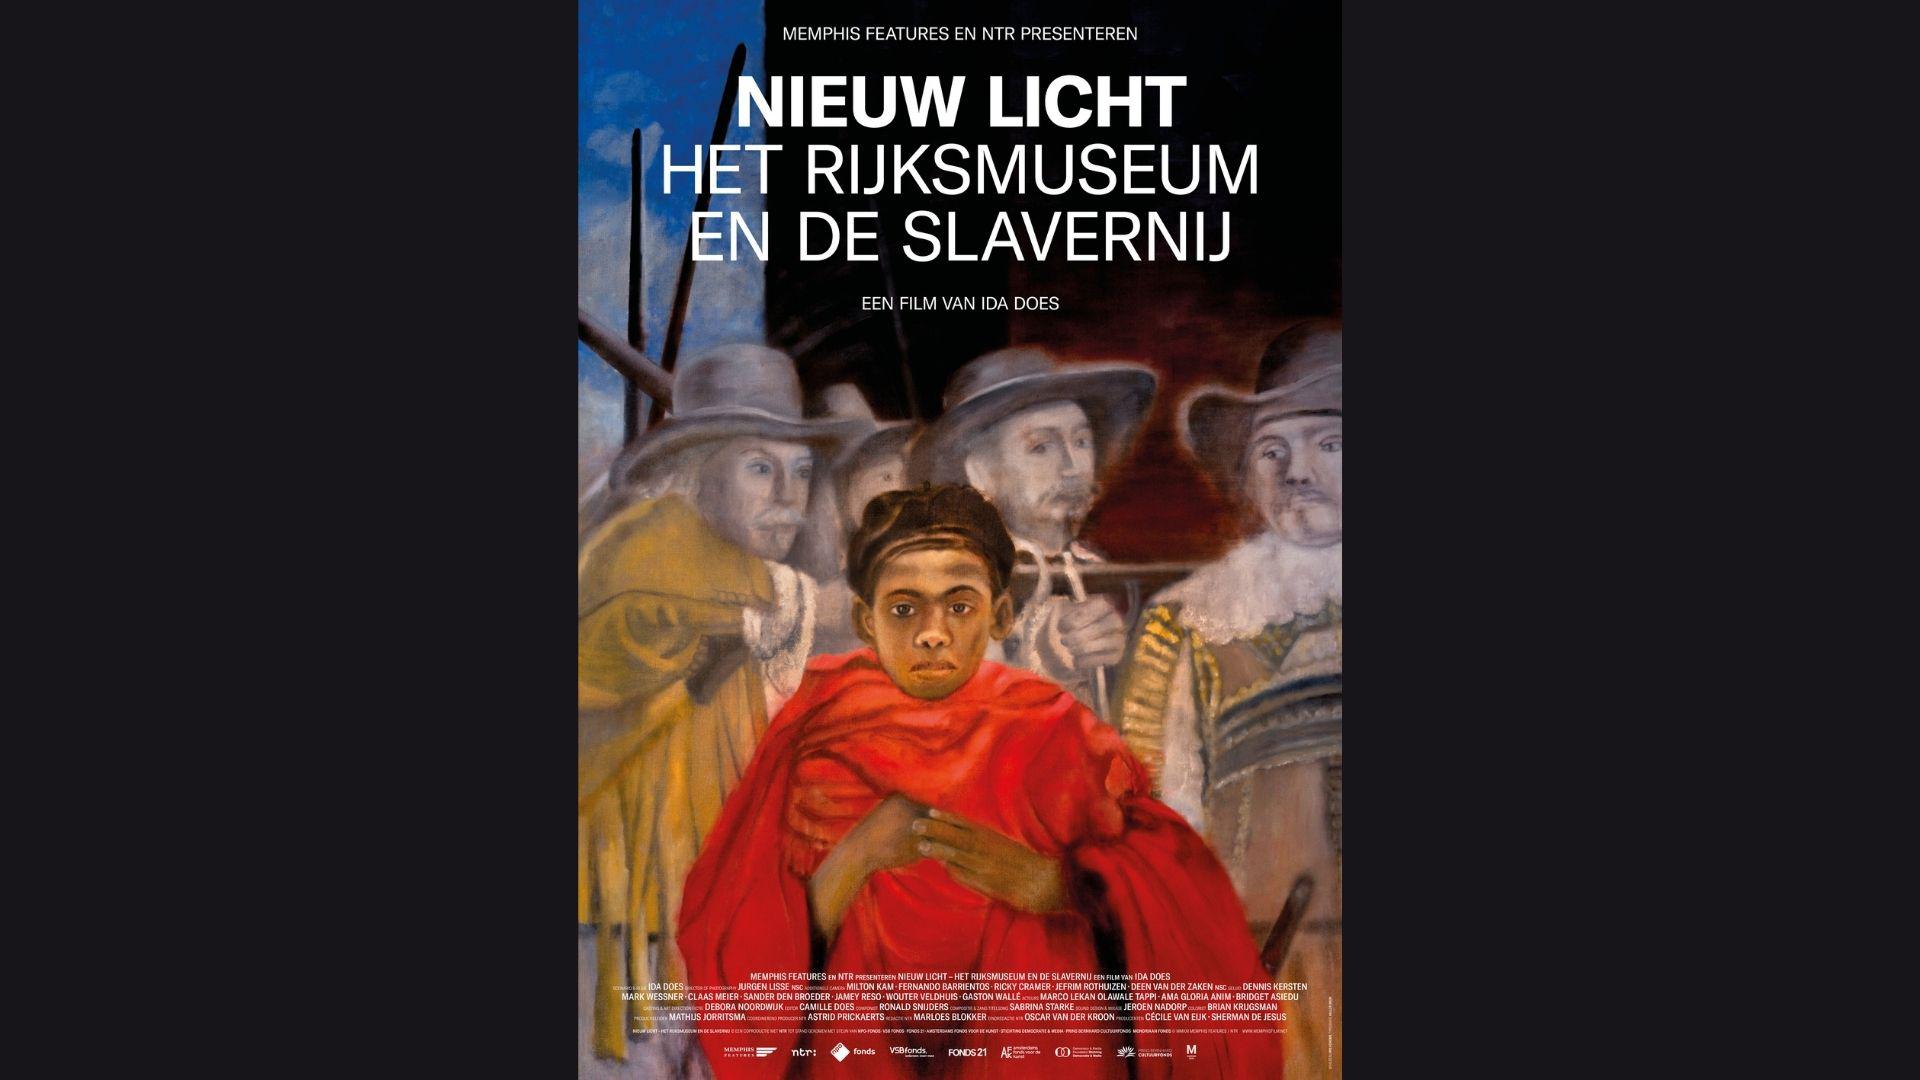 New Light - the Rijksmuseum and slavery